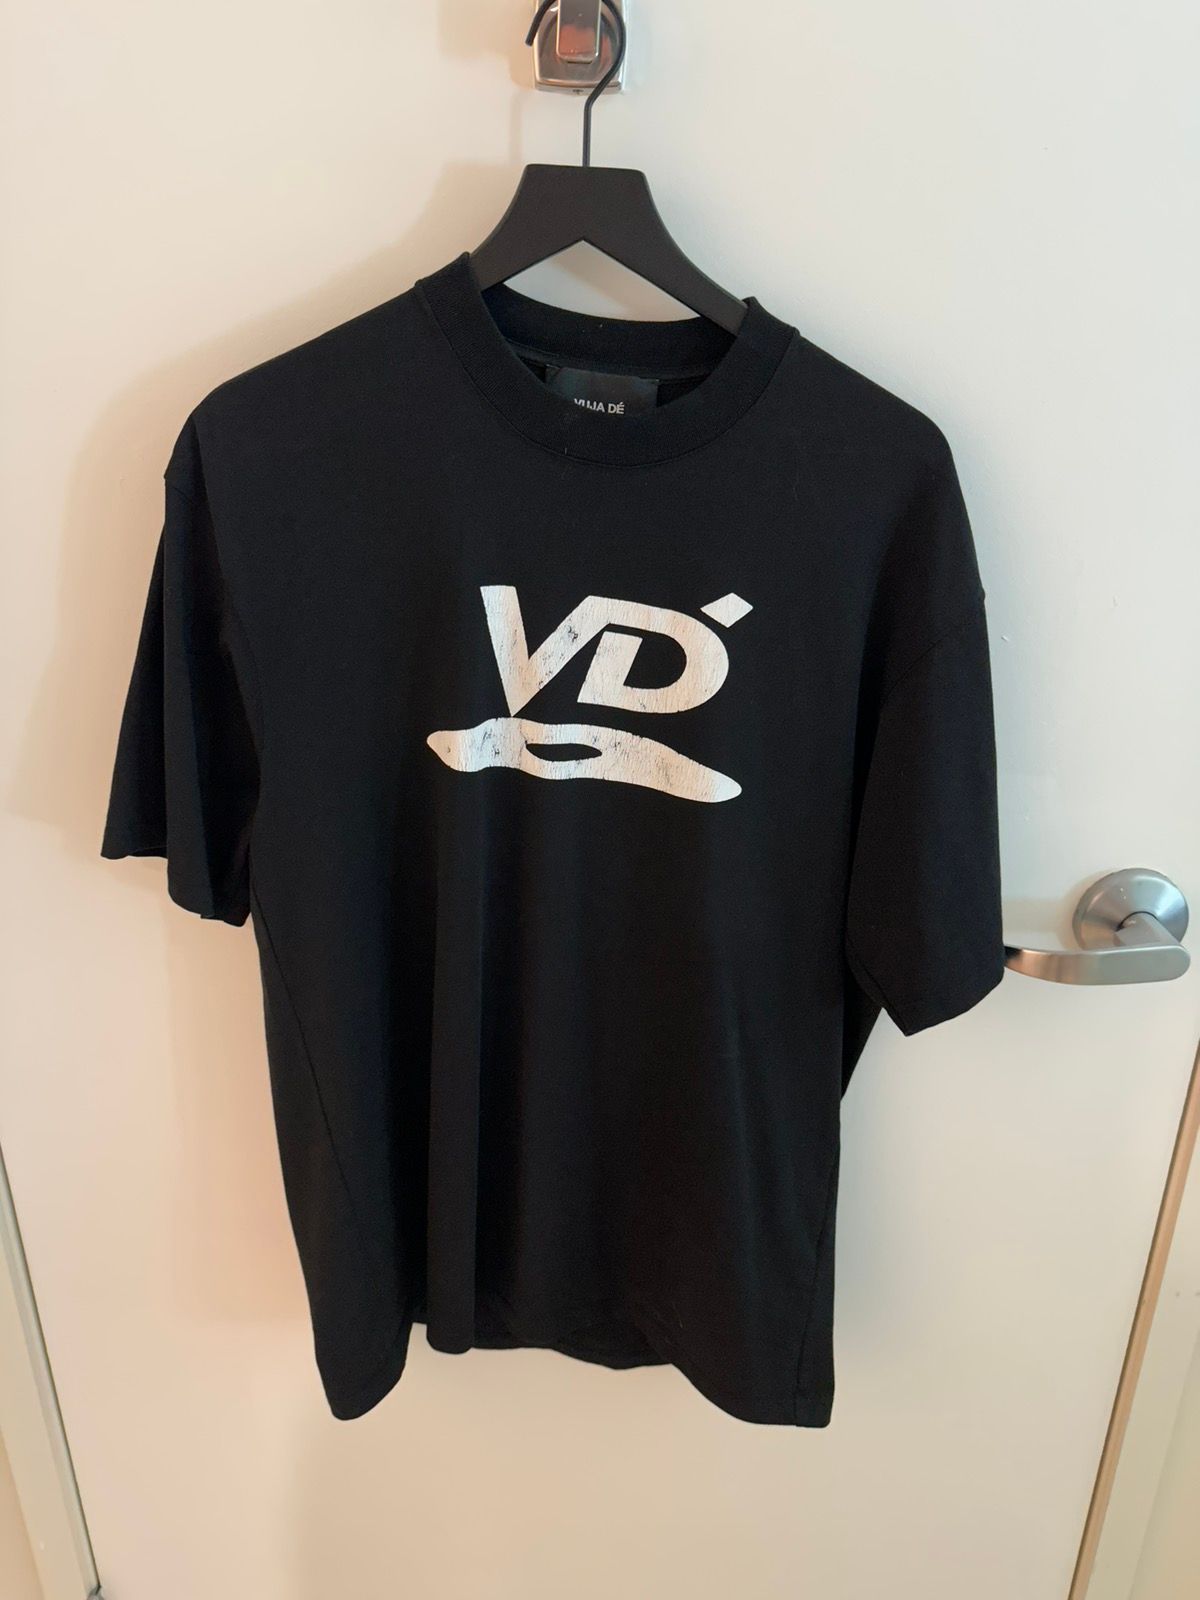 Vuja De Logo T-Shirt in Null, Men's (Size Large) Product Image